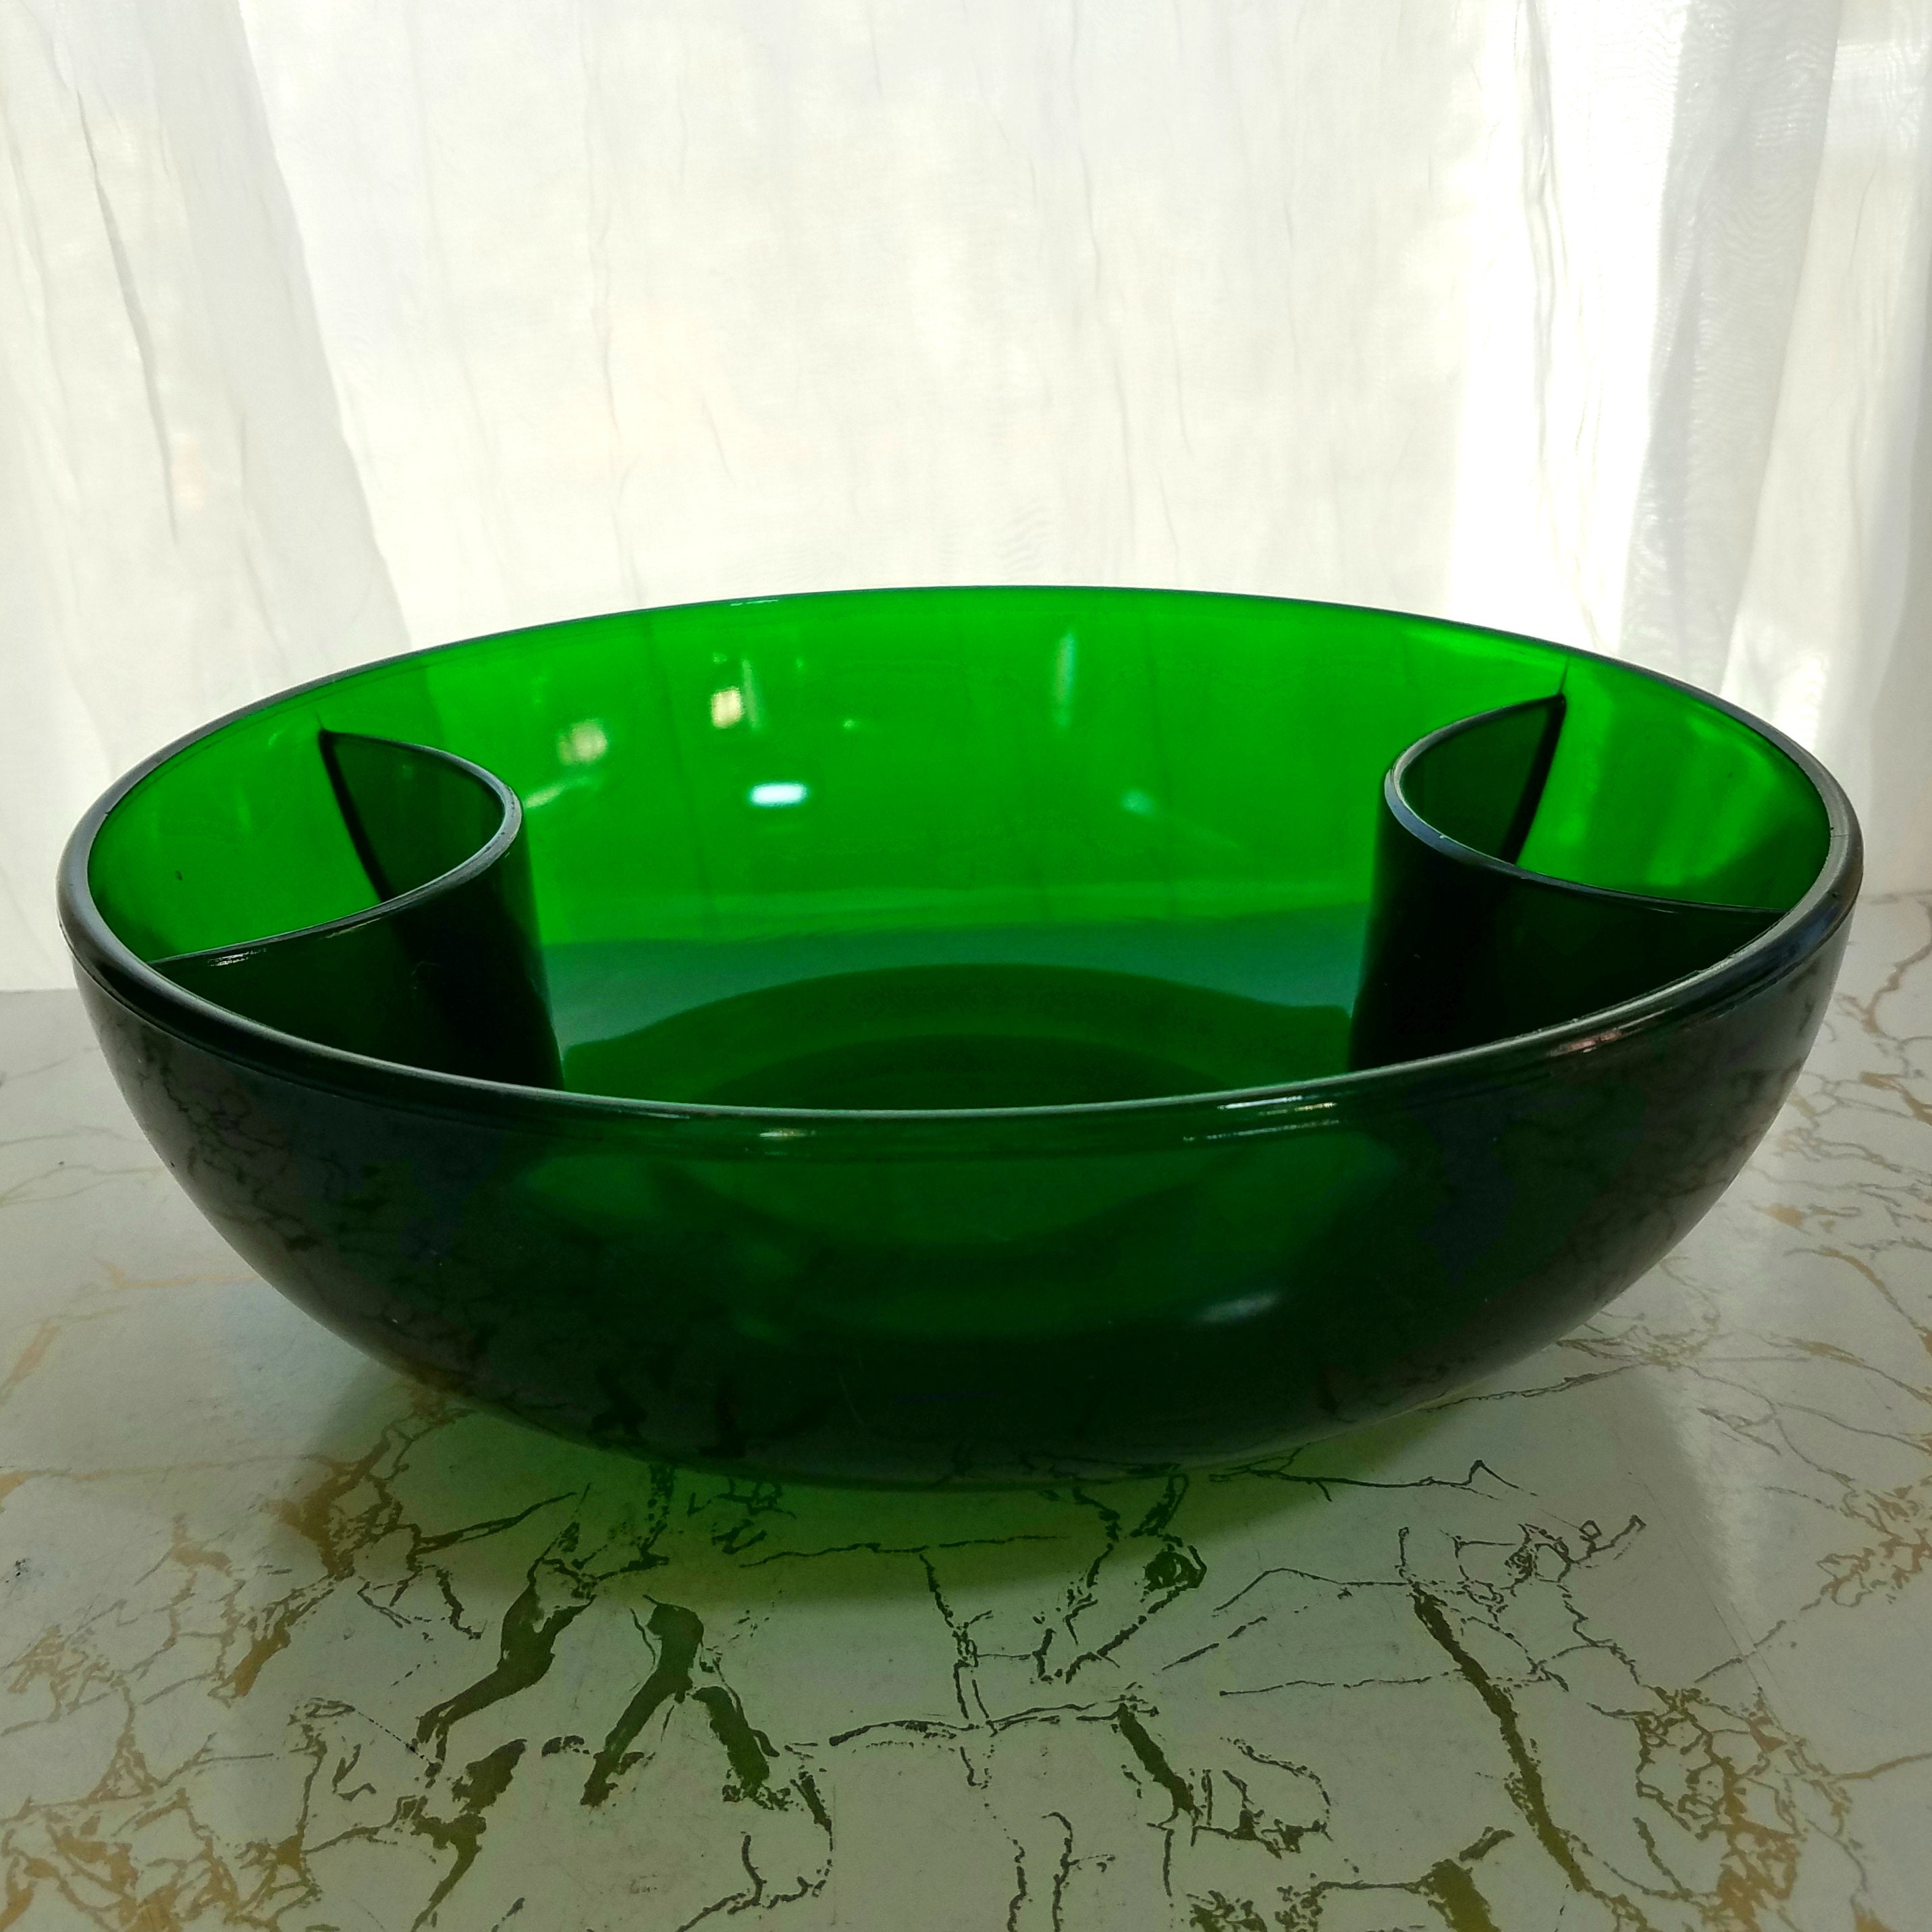 HK Living - The Emeralds: Glass Salad Bowl Green